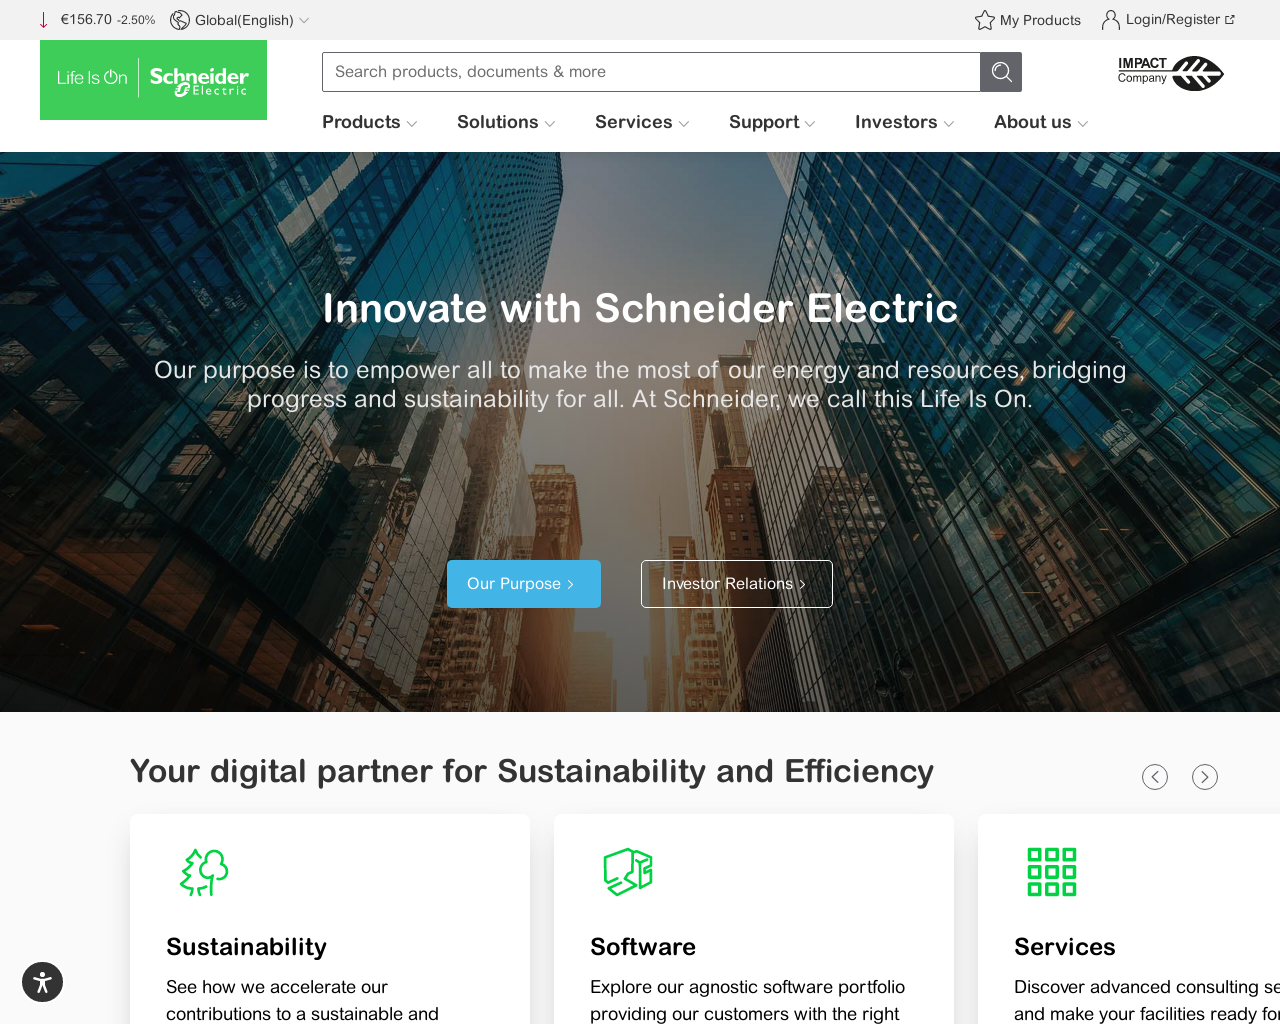 www.schneider-electric.com